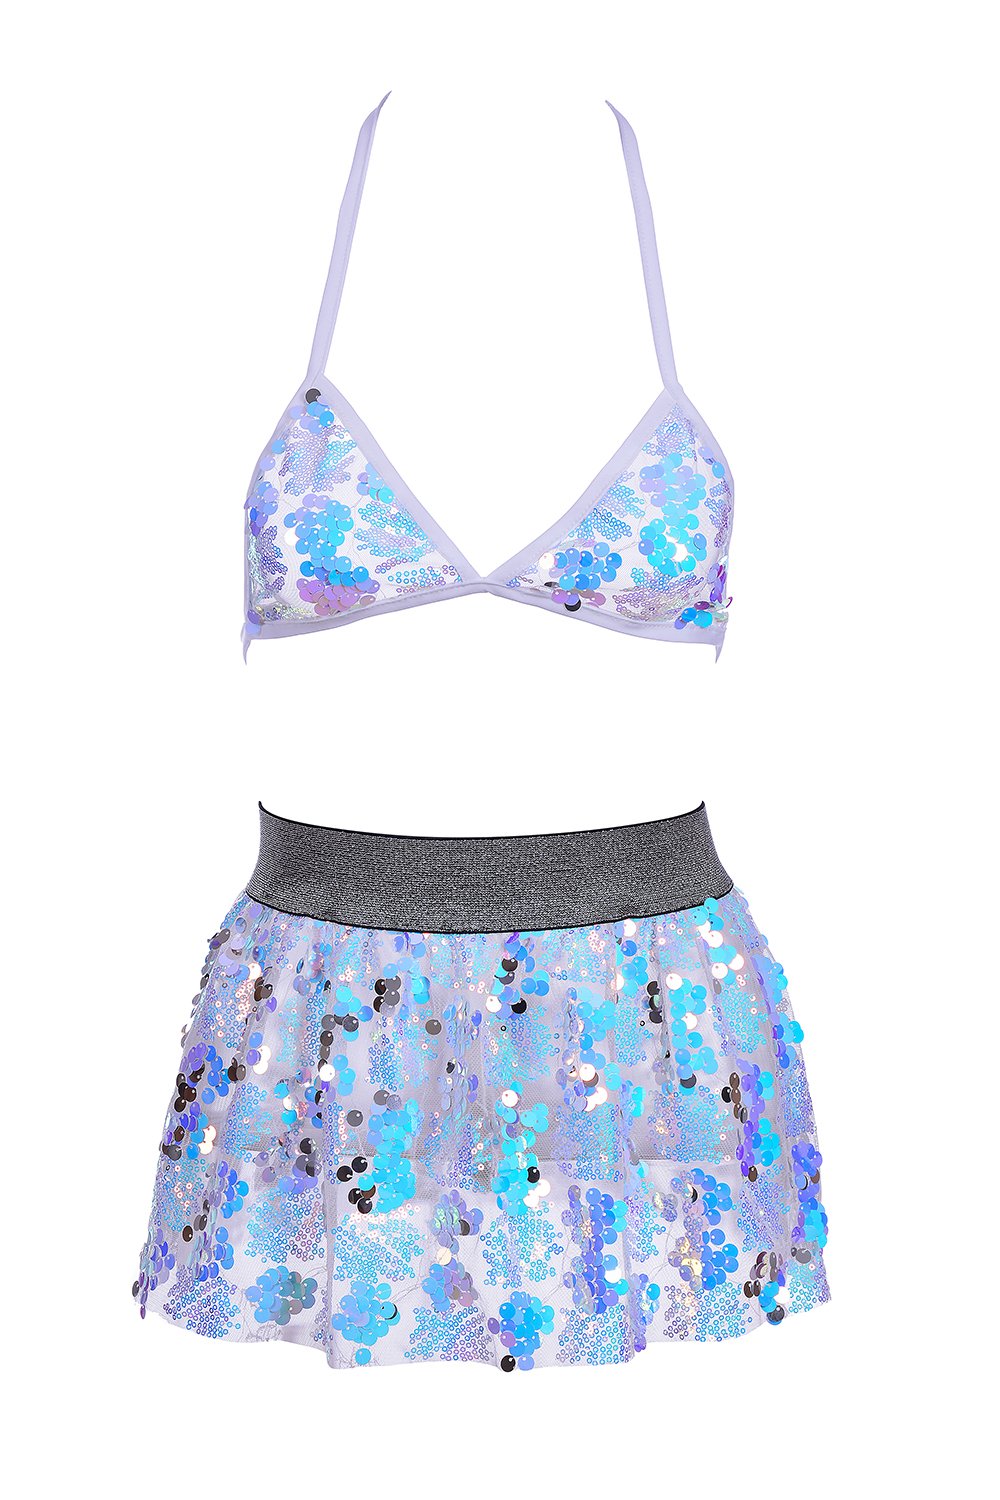 Sparkle Galaxy Sequin Set (Bra + Skirt) - Iridescent